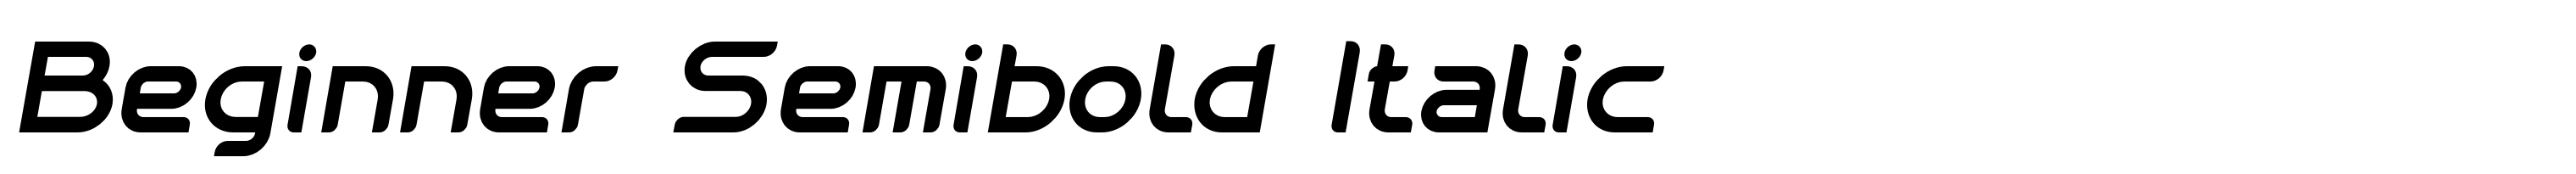 Beginner Semibold Italic